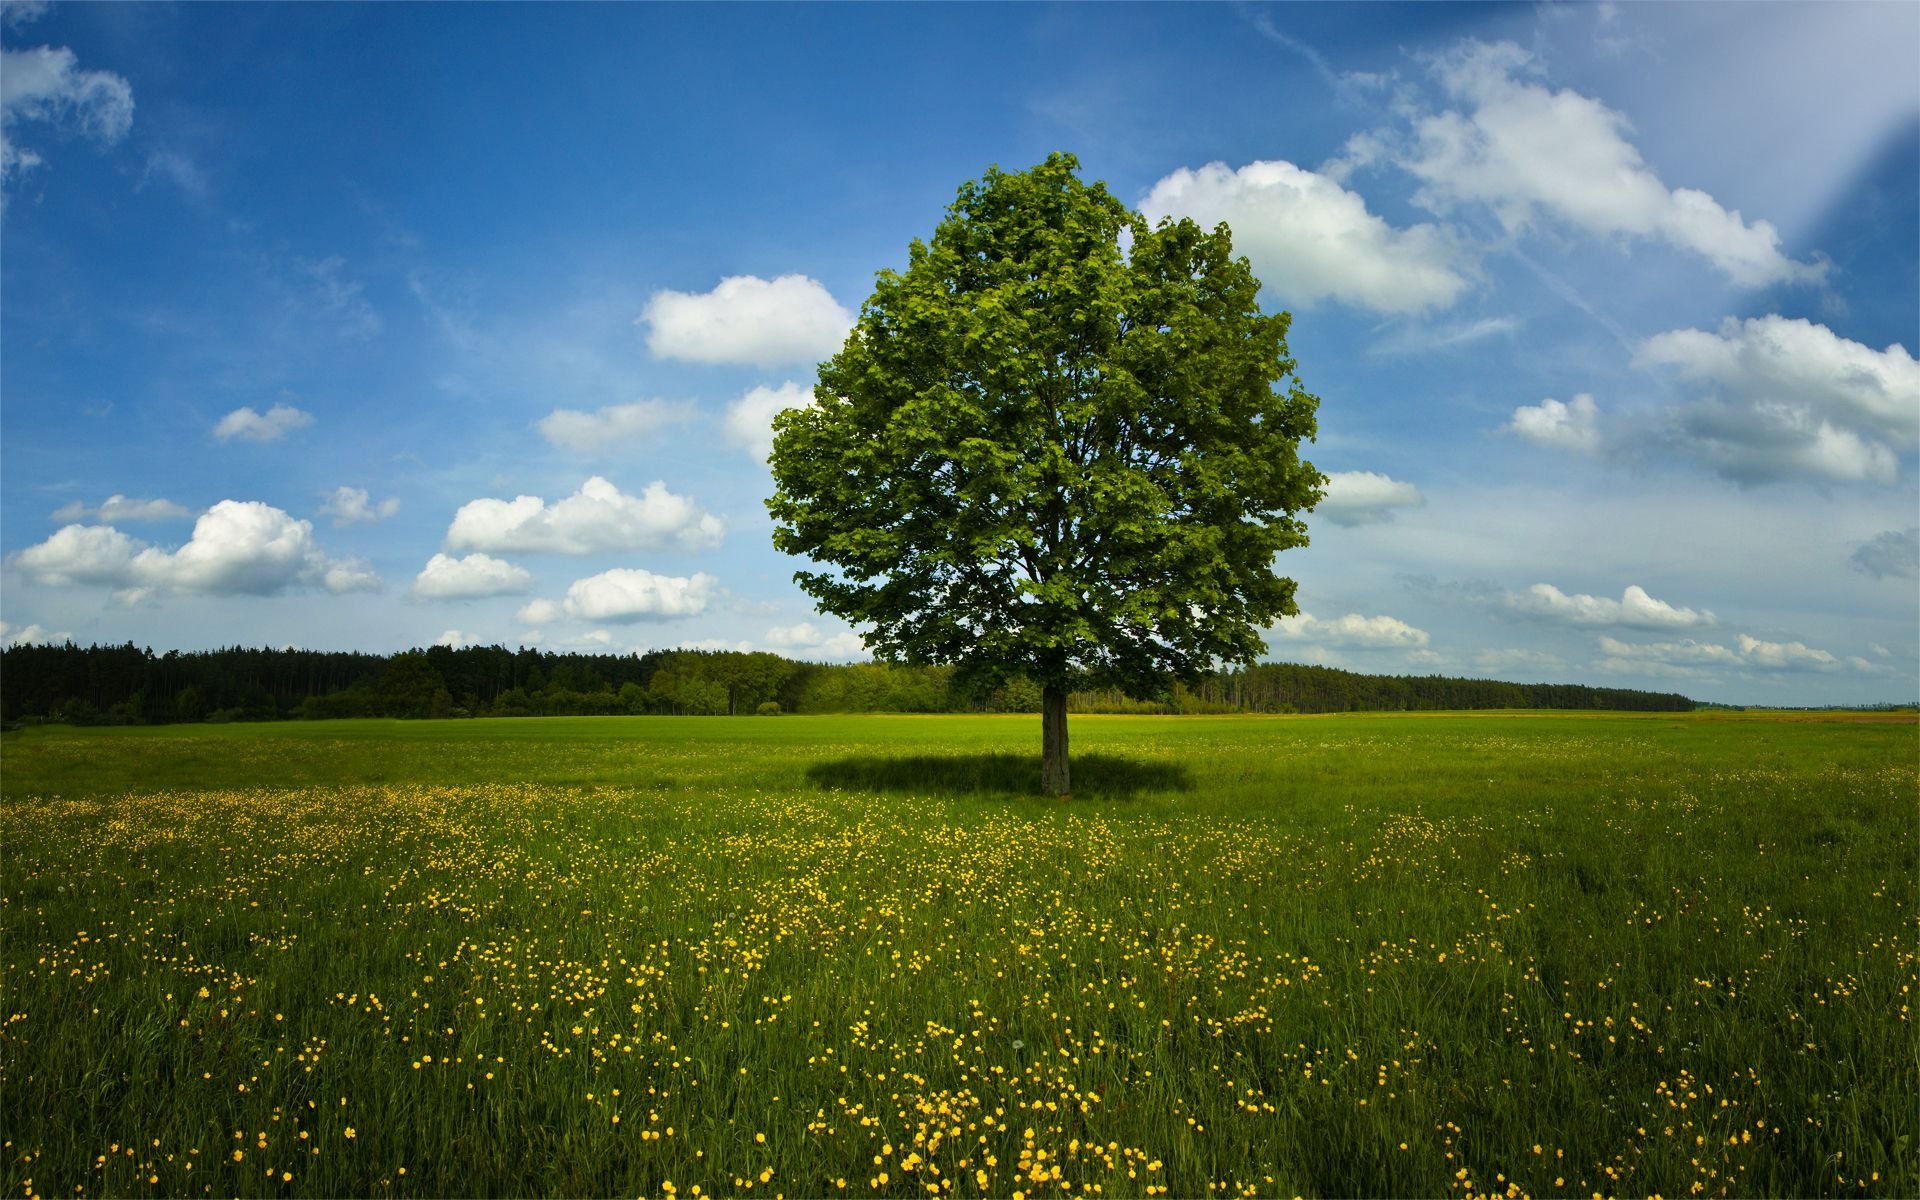 Natural tree. Природа деревья. Красивое дерево. Летний пейзаж. Дерево в поле.